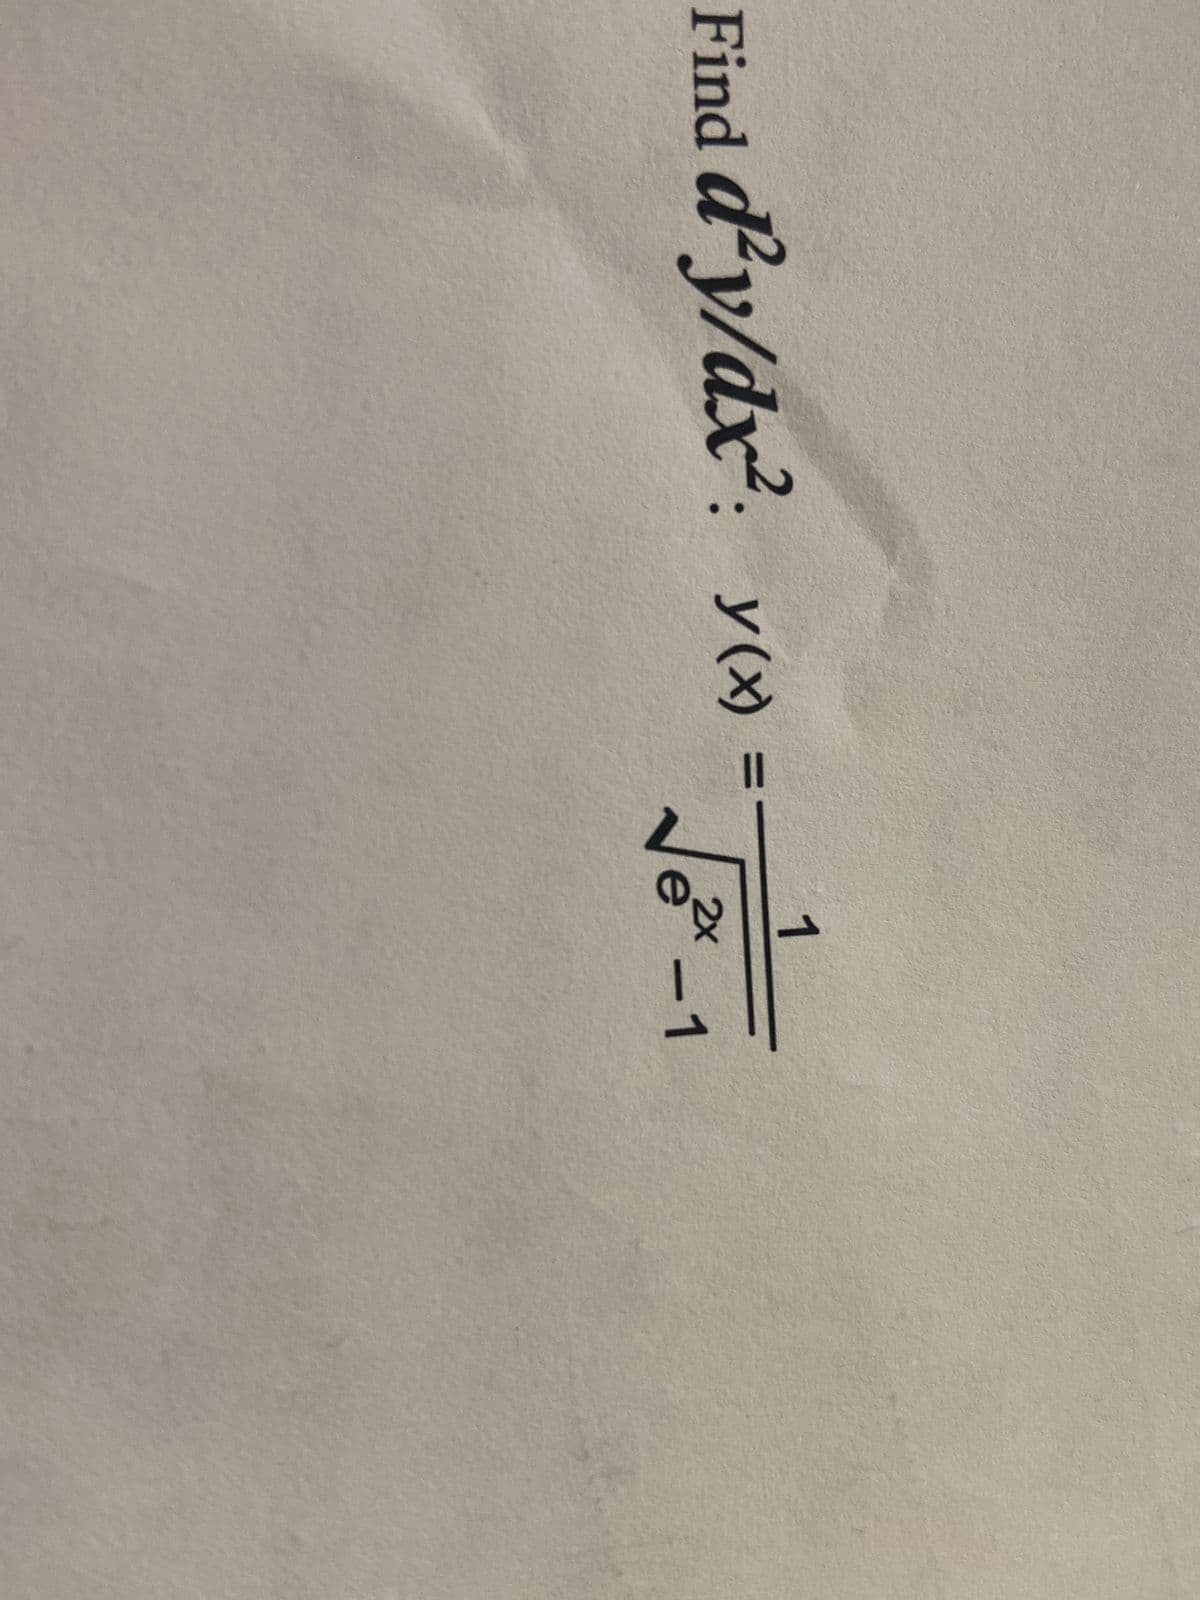 Find d²y/dx²:
y(x)
=
1
2x
e-1